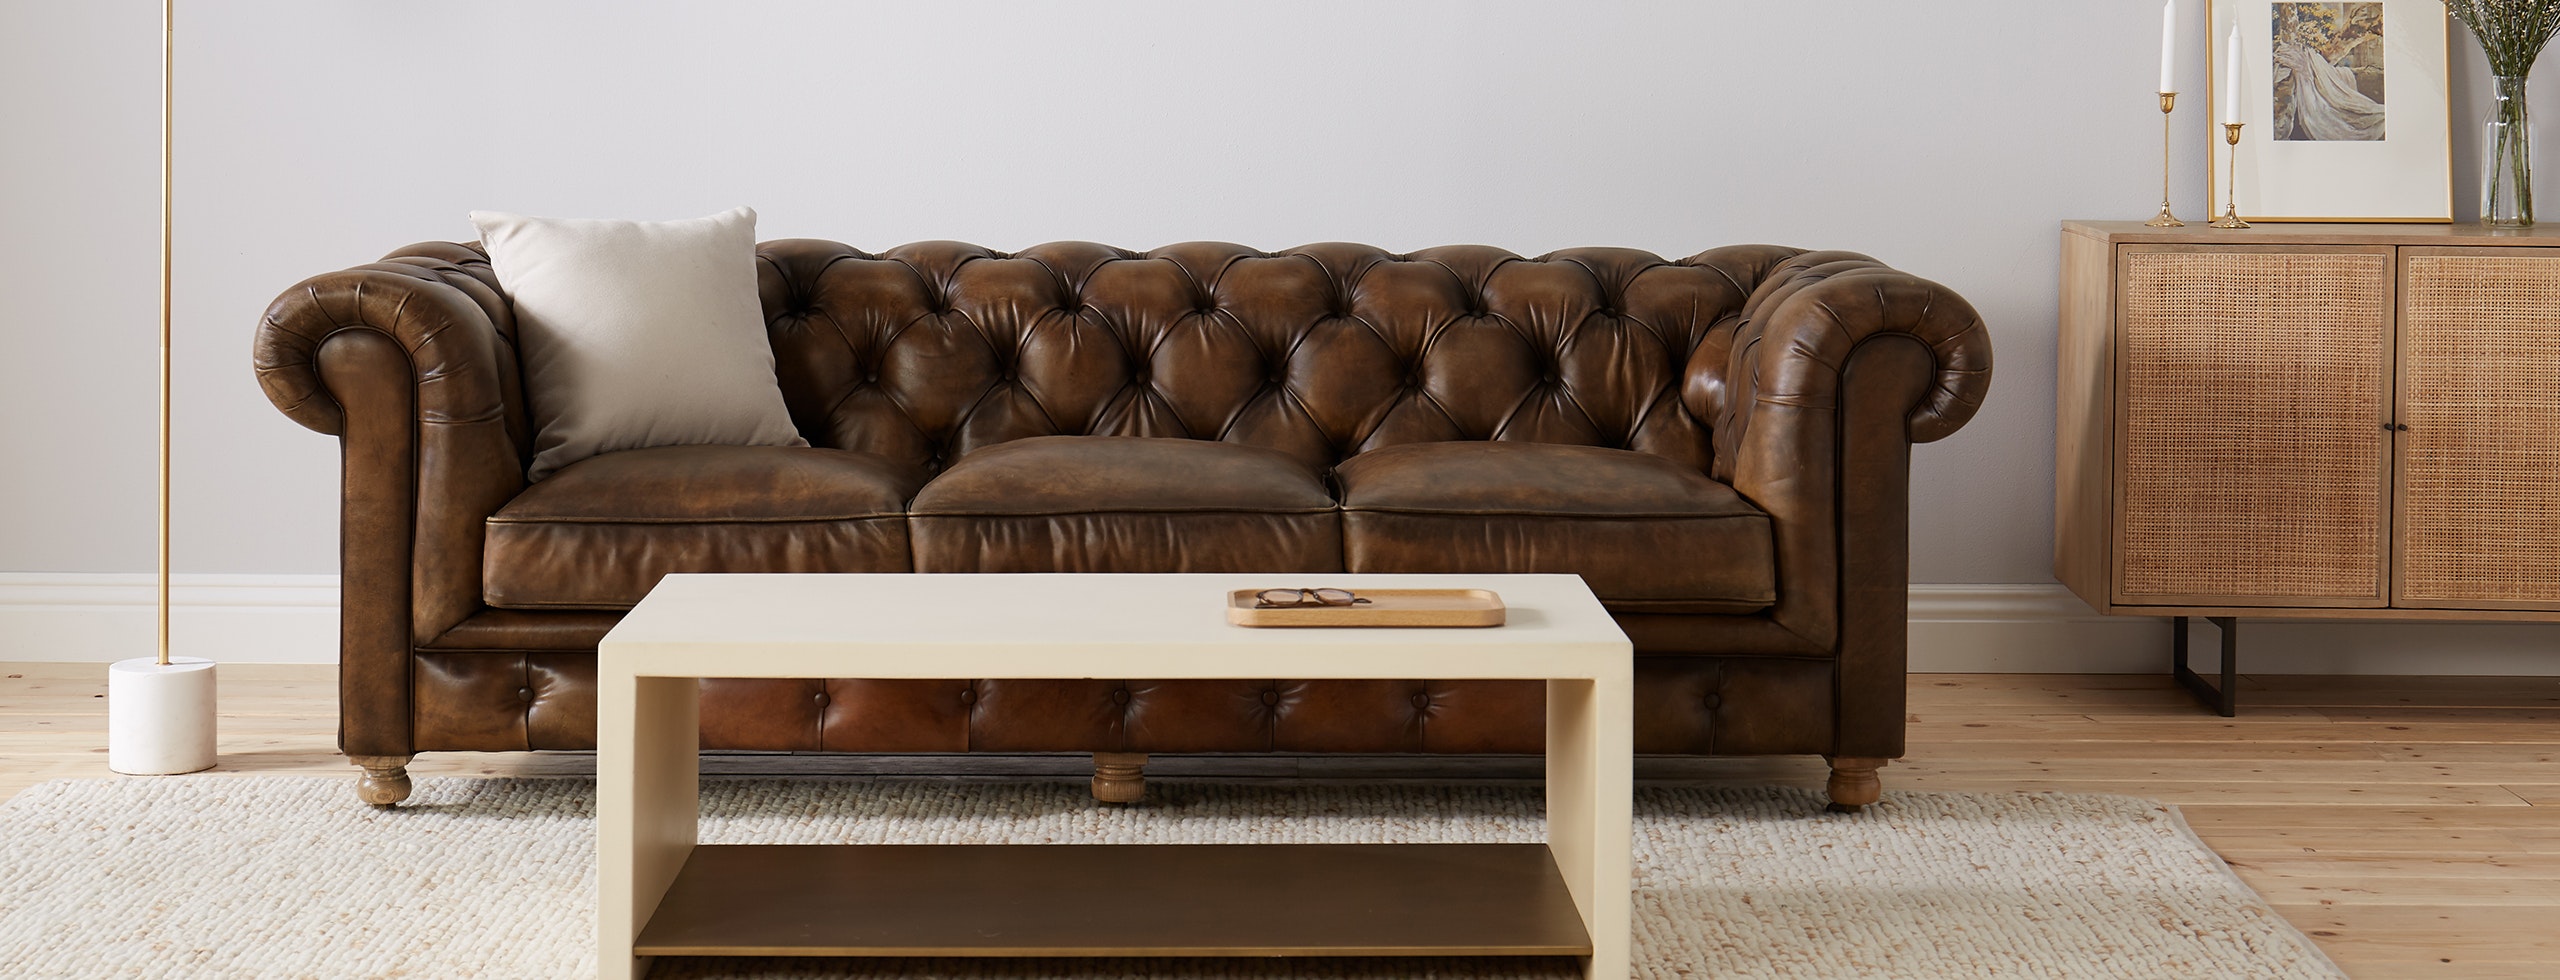 joybird liam leather sofa